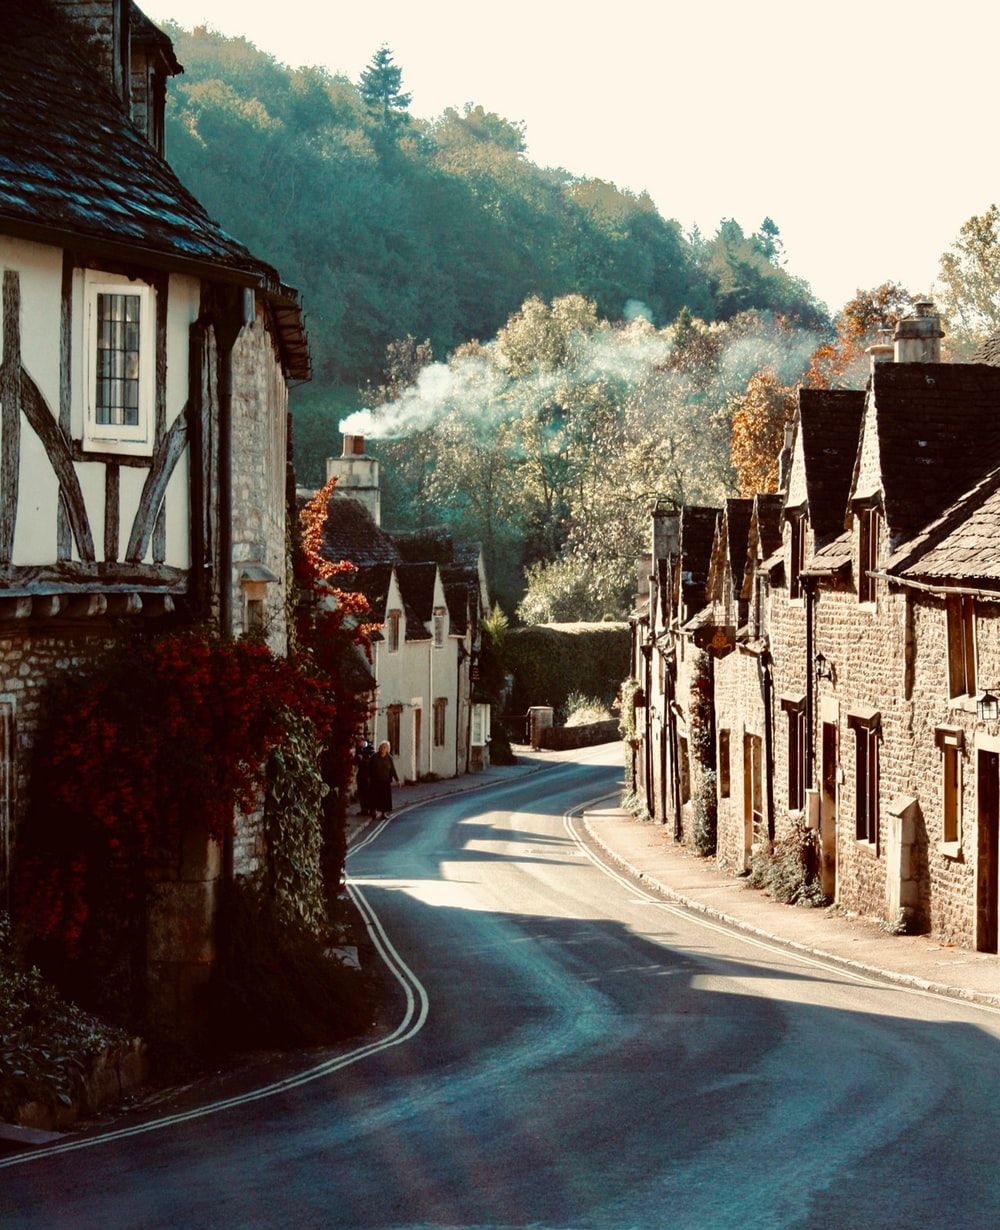 English Village Picture. Download Free Image